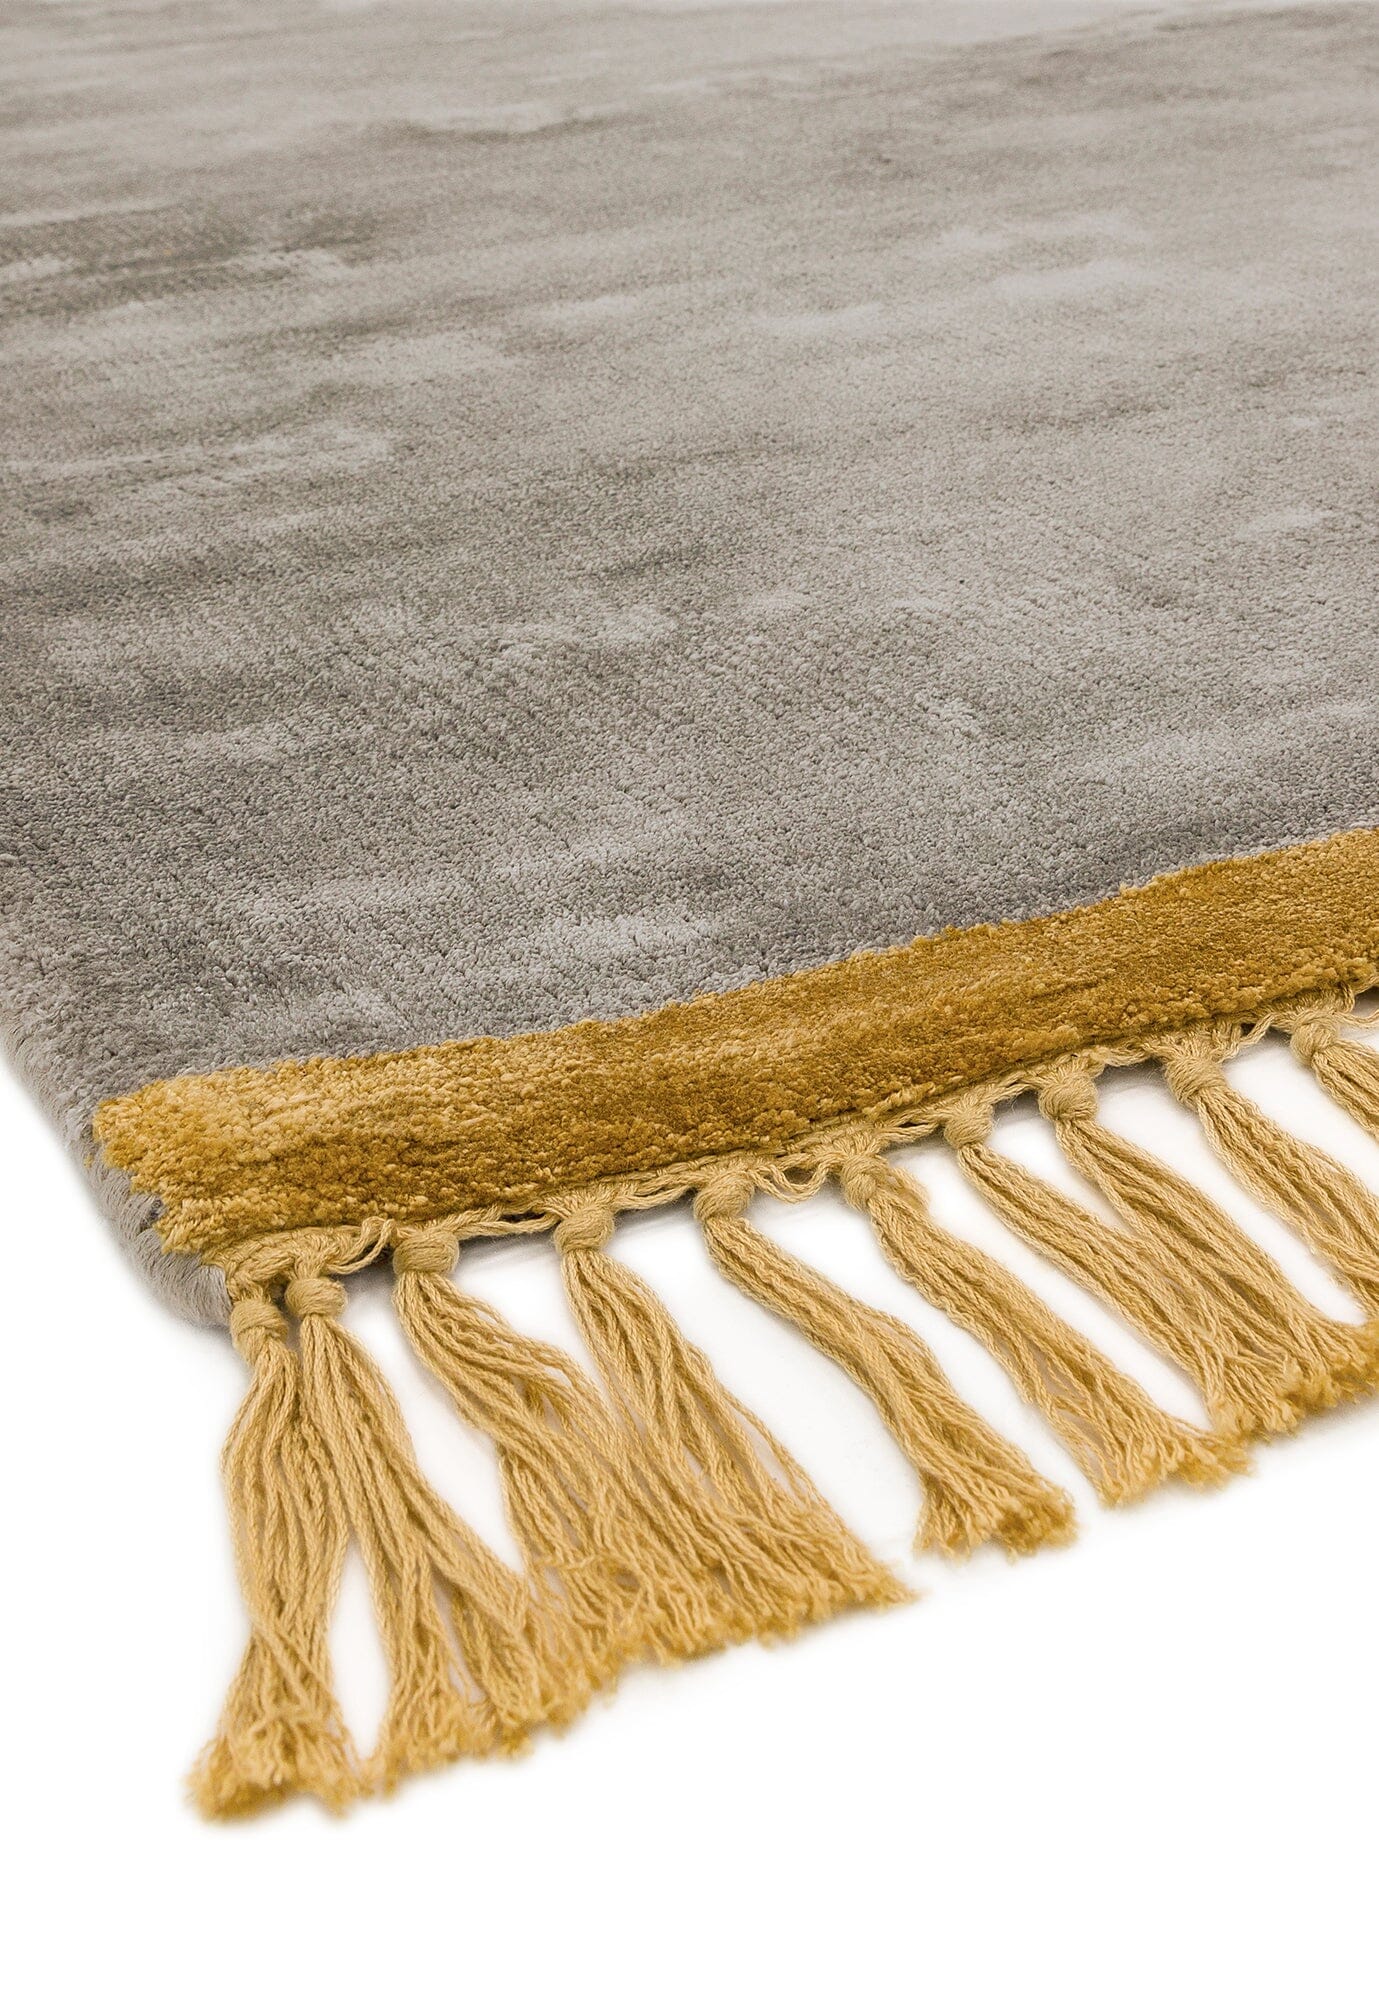 Asiatic Carpets Elgin Hand Woven Rug Silver/ Mustard Border - 160 x 230cm